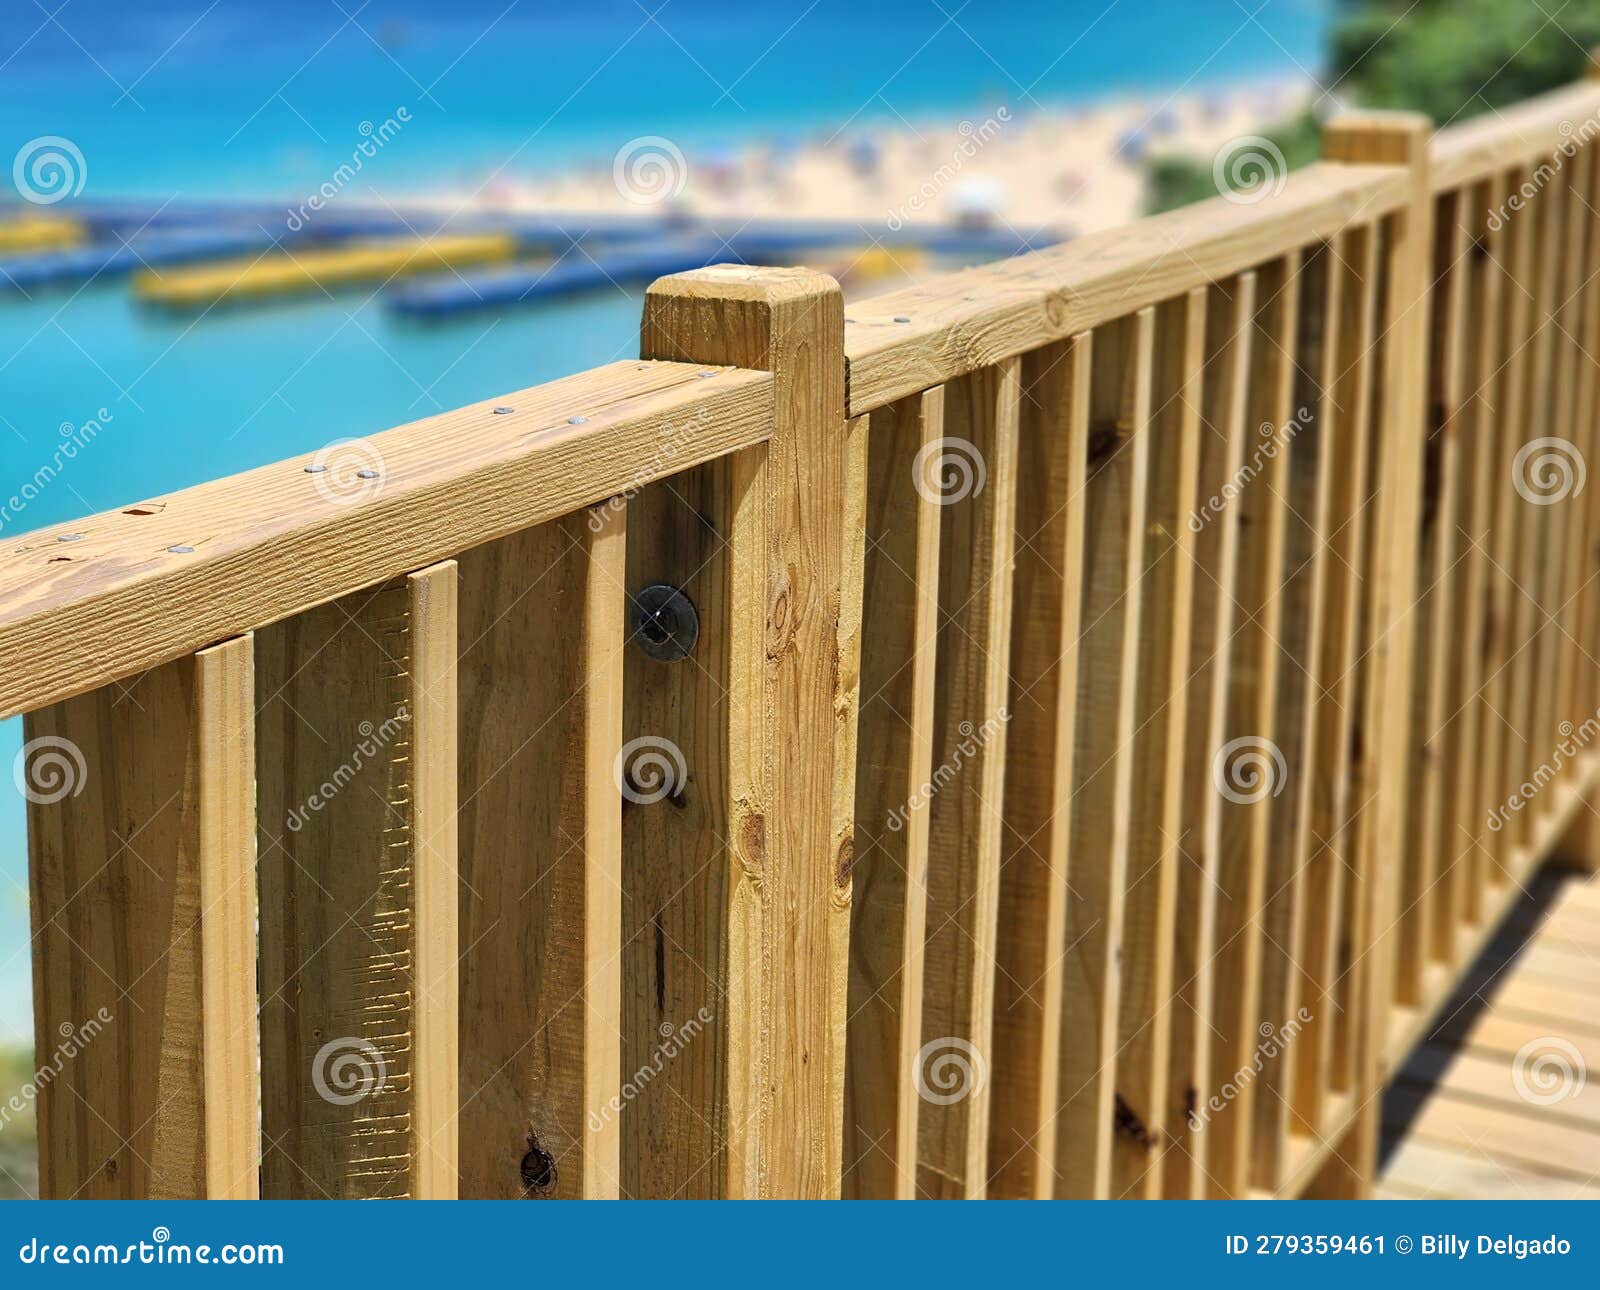 boardwalk next to a beach